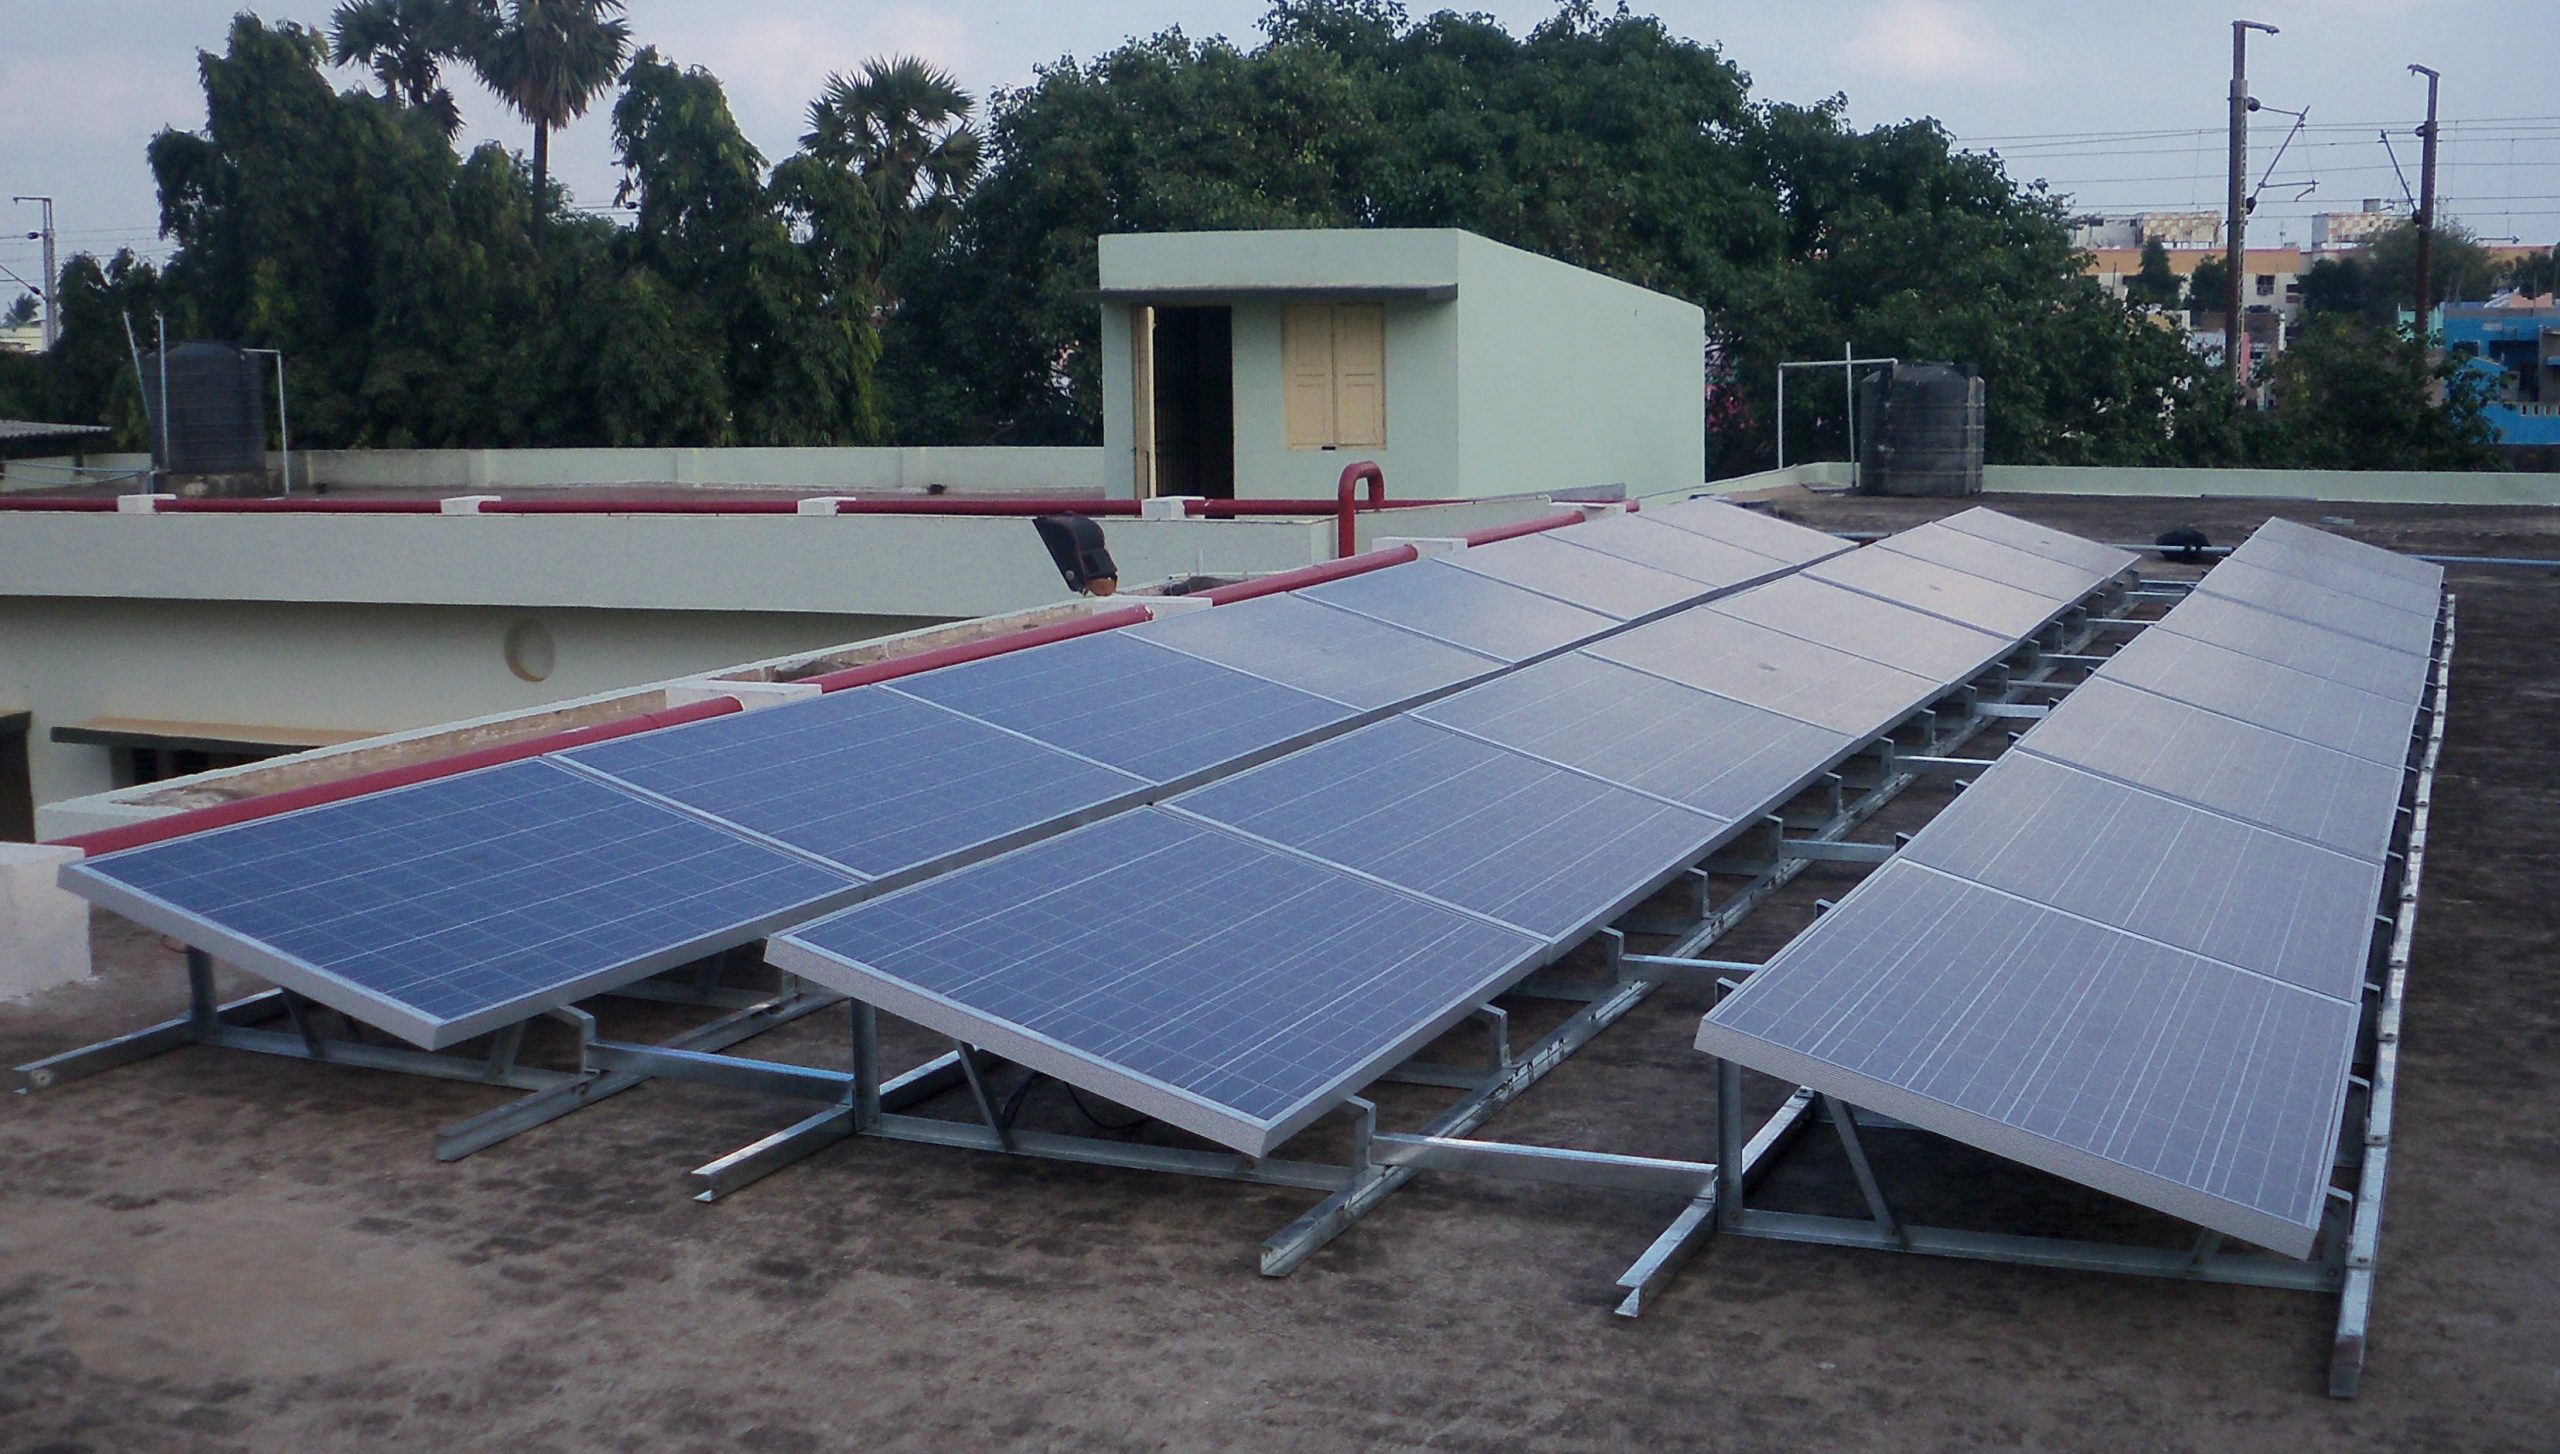 Should India Manufacture Solar Panels?